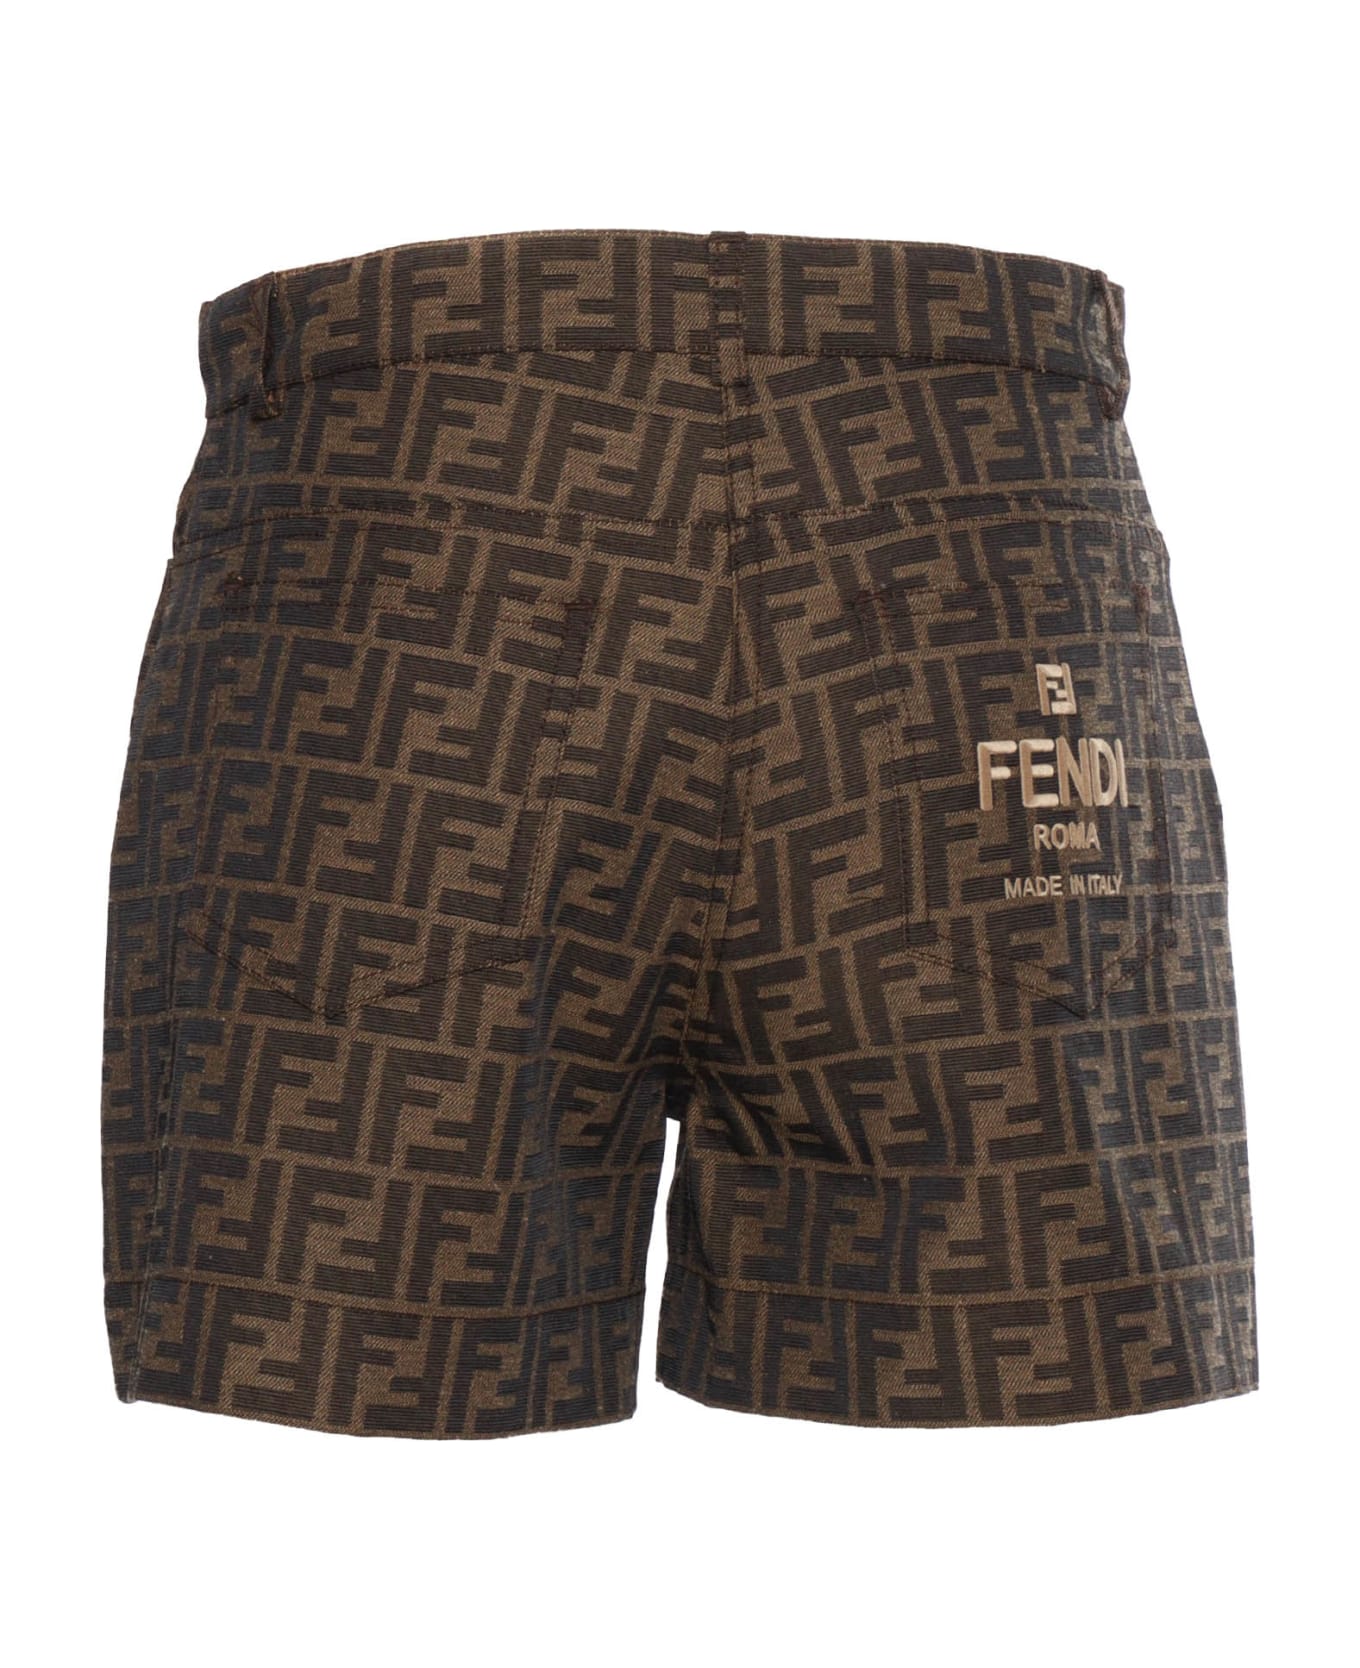 Fendi Ff Brown Canvas Shorts - BROWN